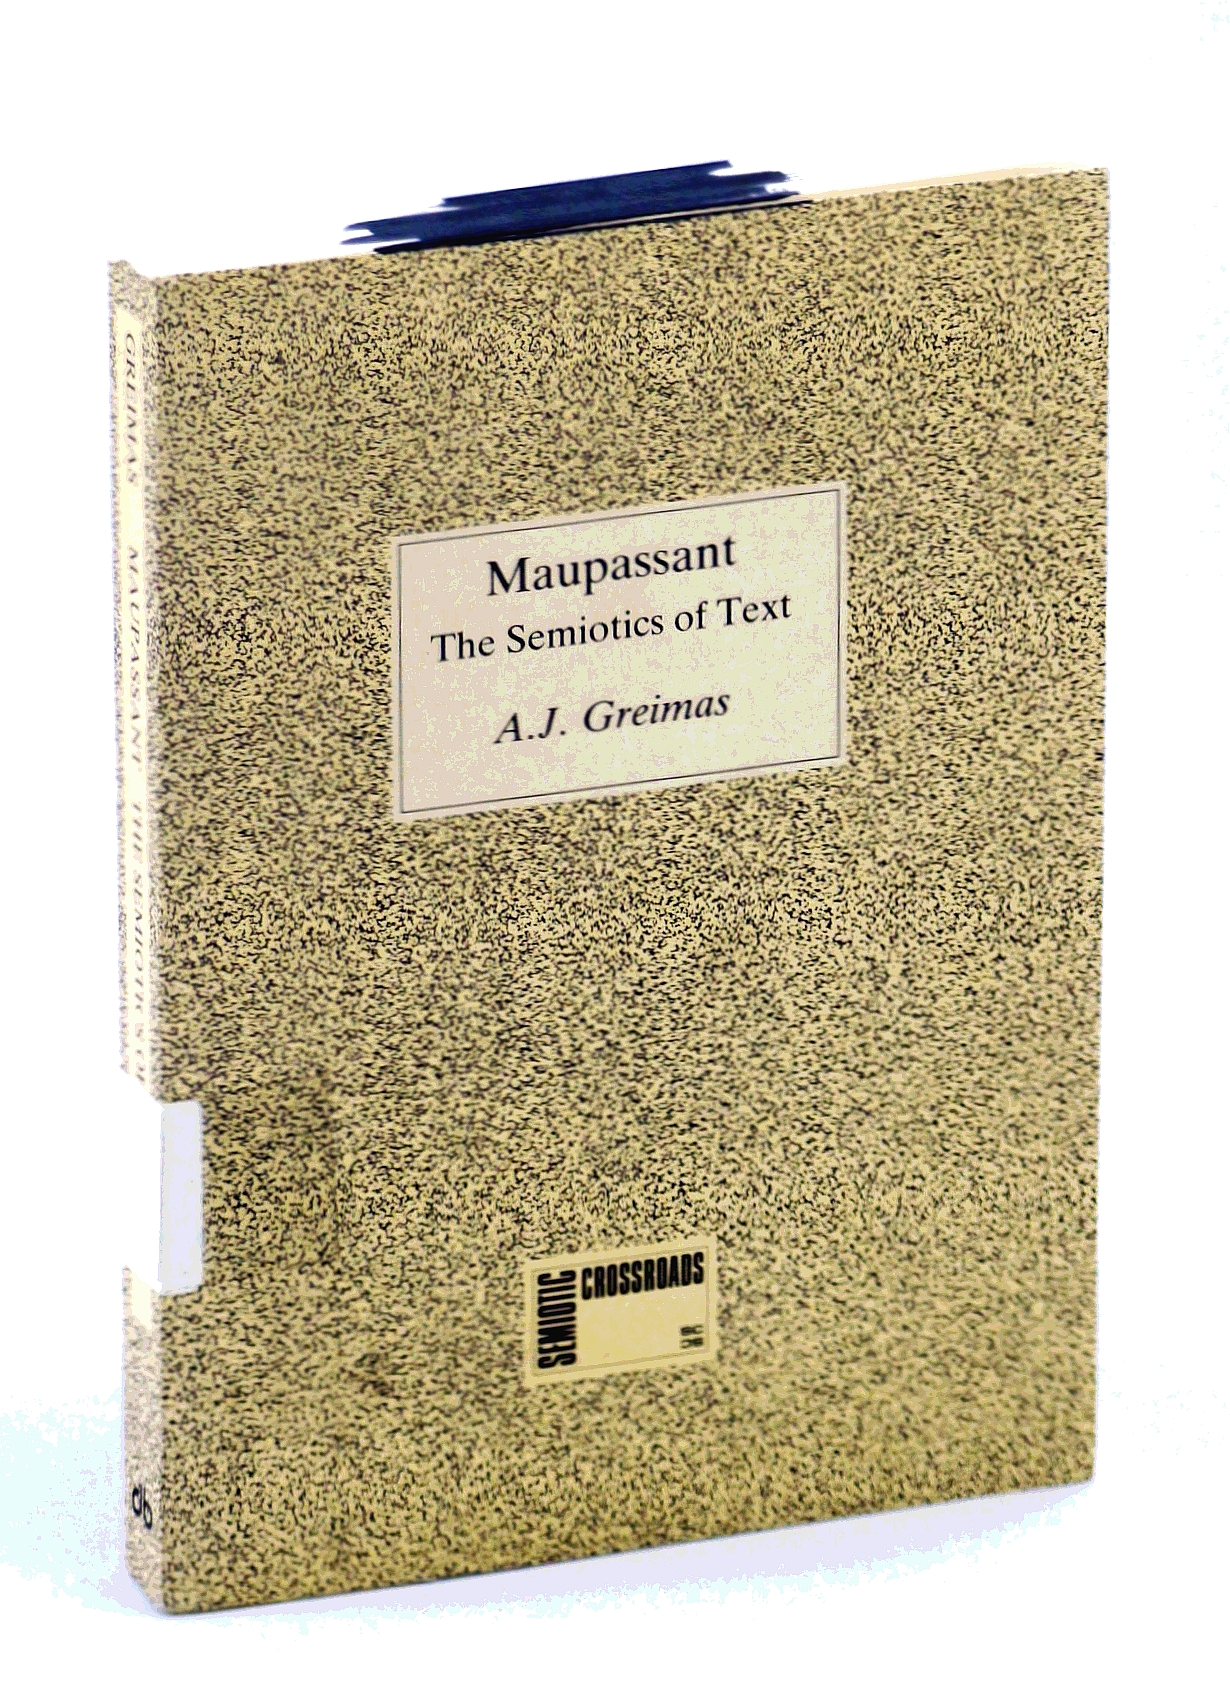 Maupassant: The Semiotics of Text - Practical Exercises (Semiotic Crossroads) - Algirdas Julien [A.J.] Greimas; Perron, Paul [Translator]